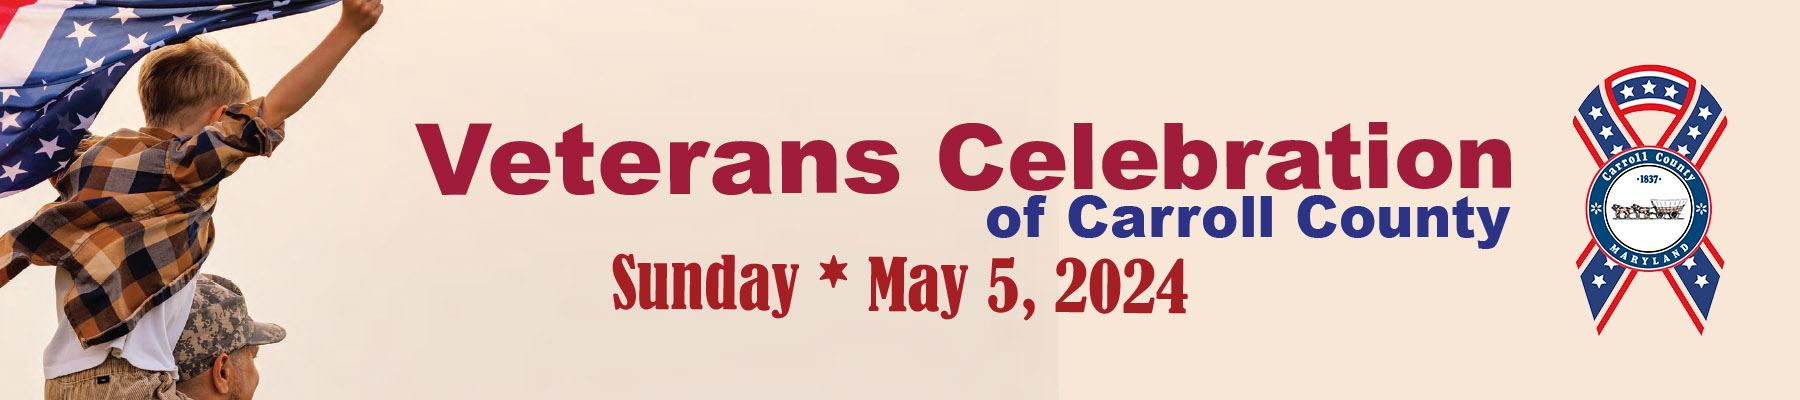 Sponsorship Opportunities for Veterans Celebration of Carroll County, MD